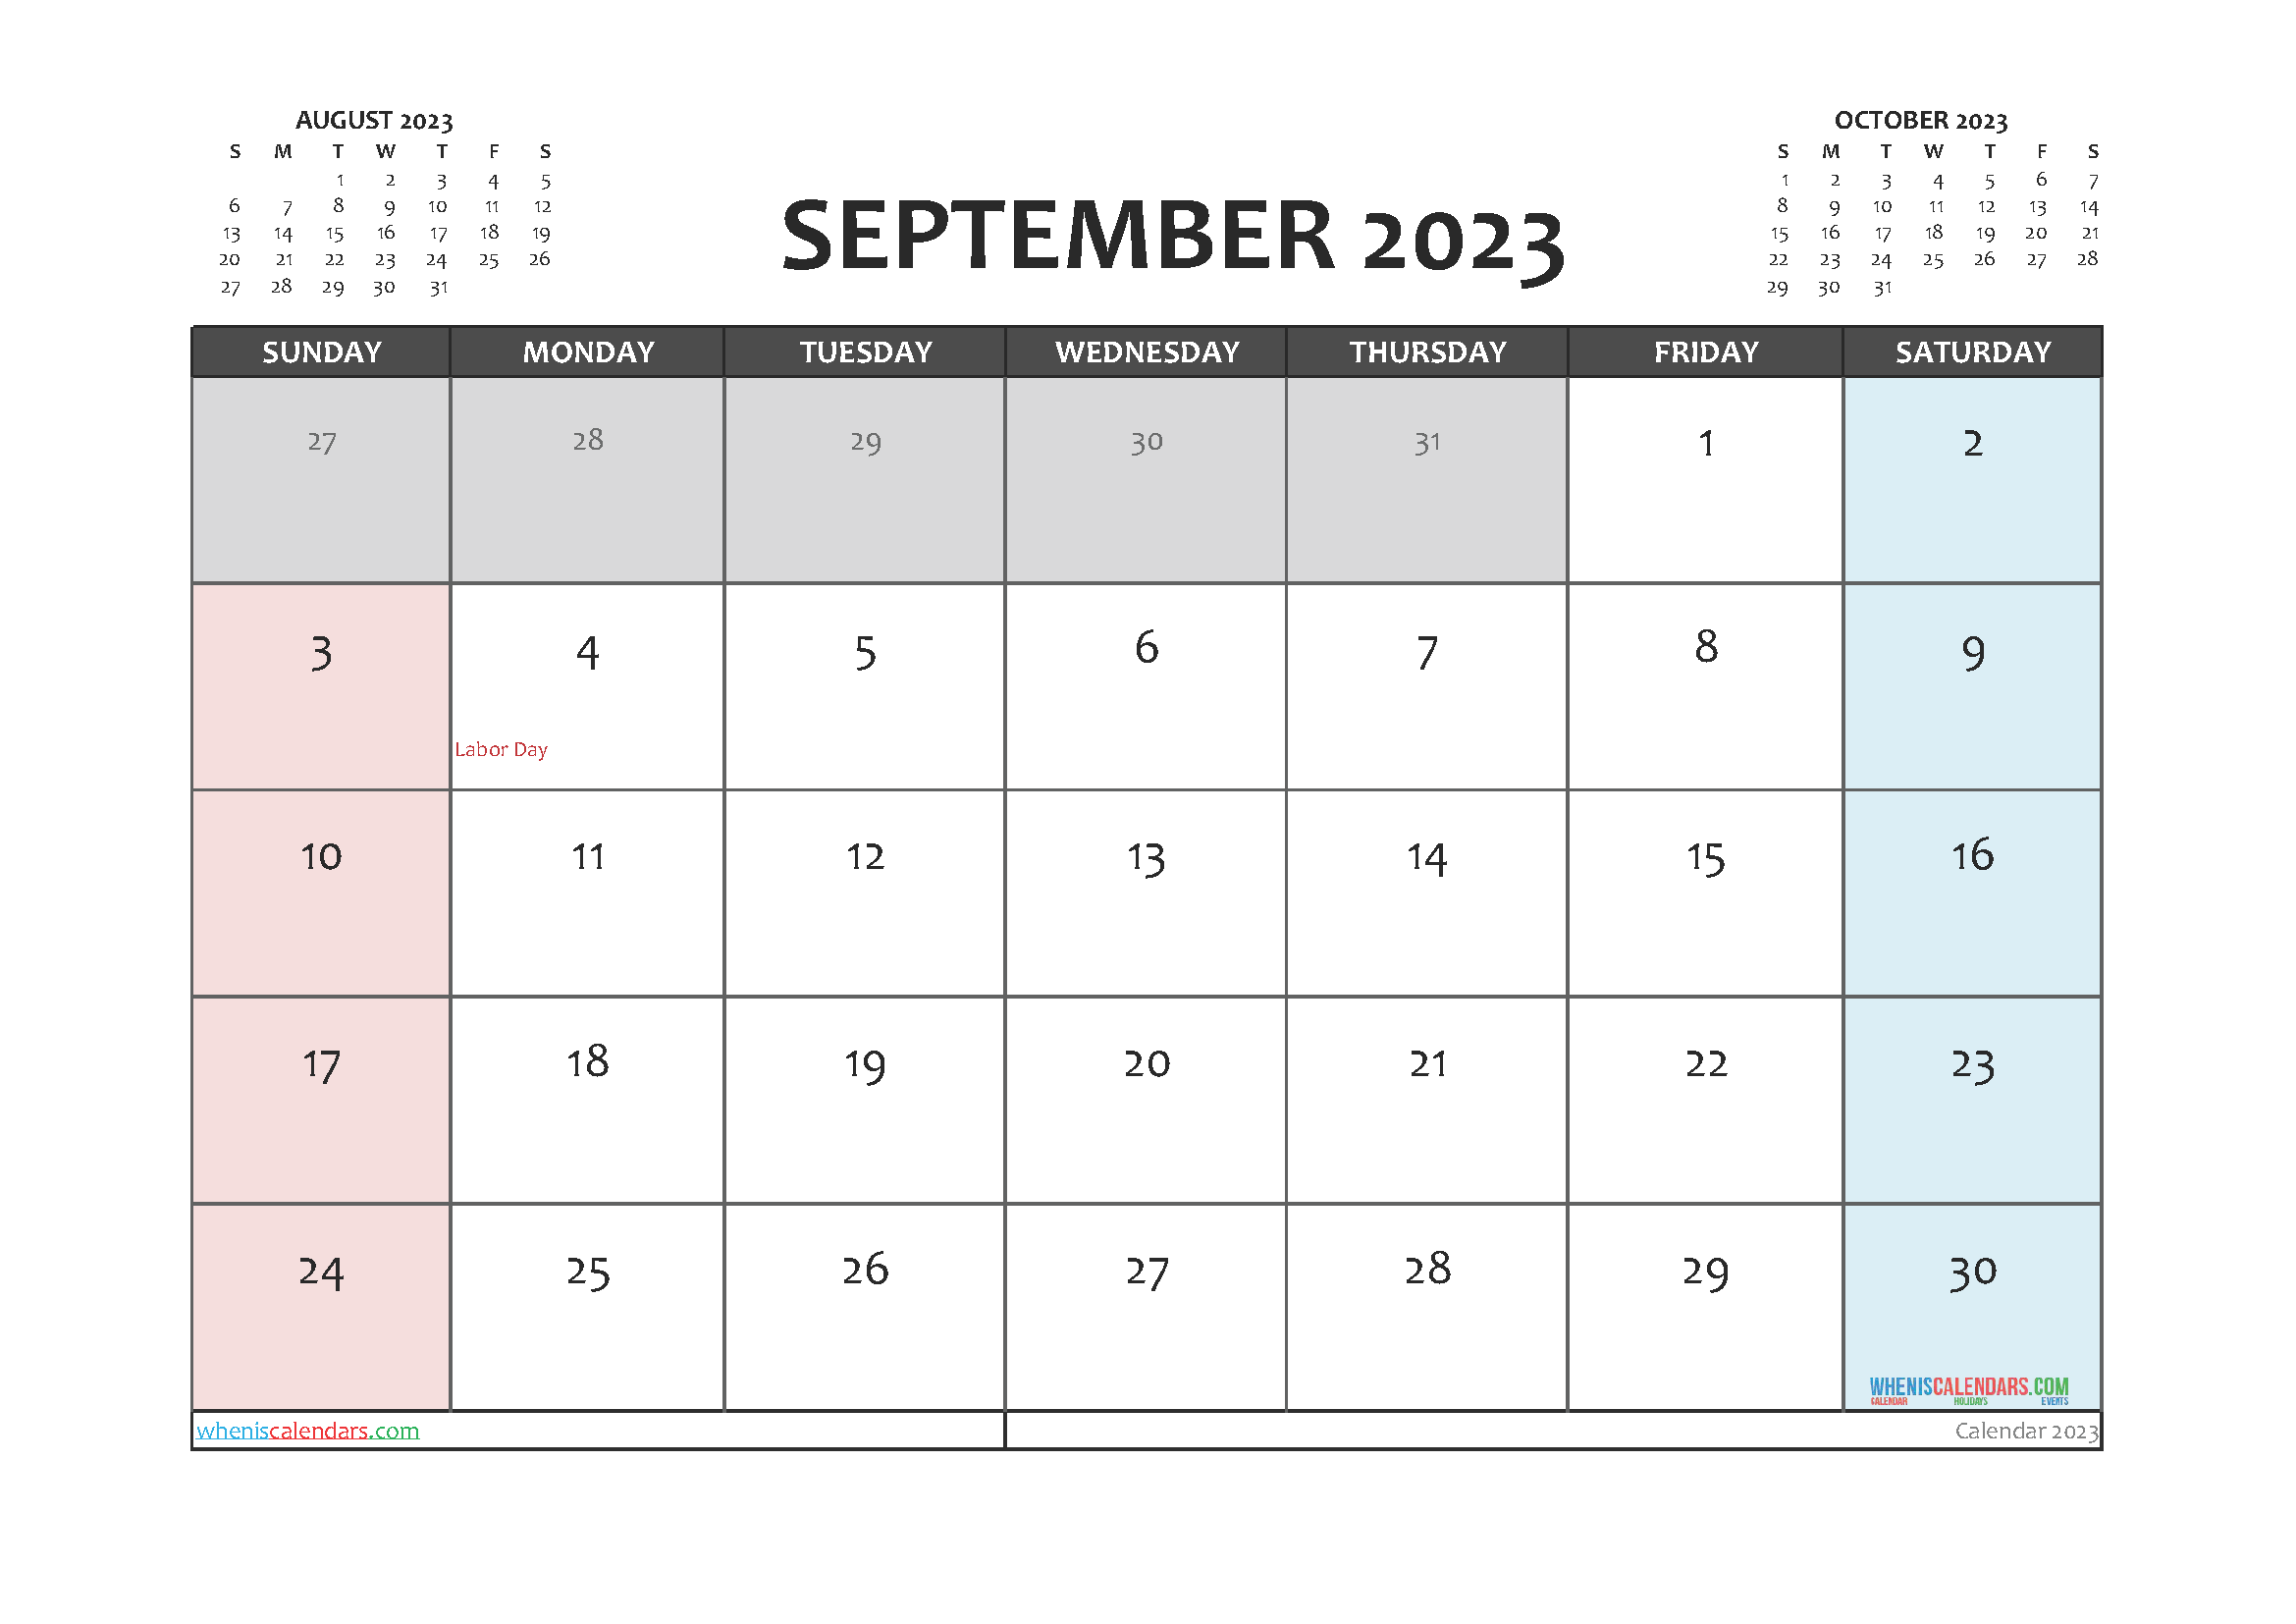 printable-june-2023-calendar-free-12-templates